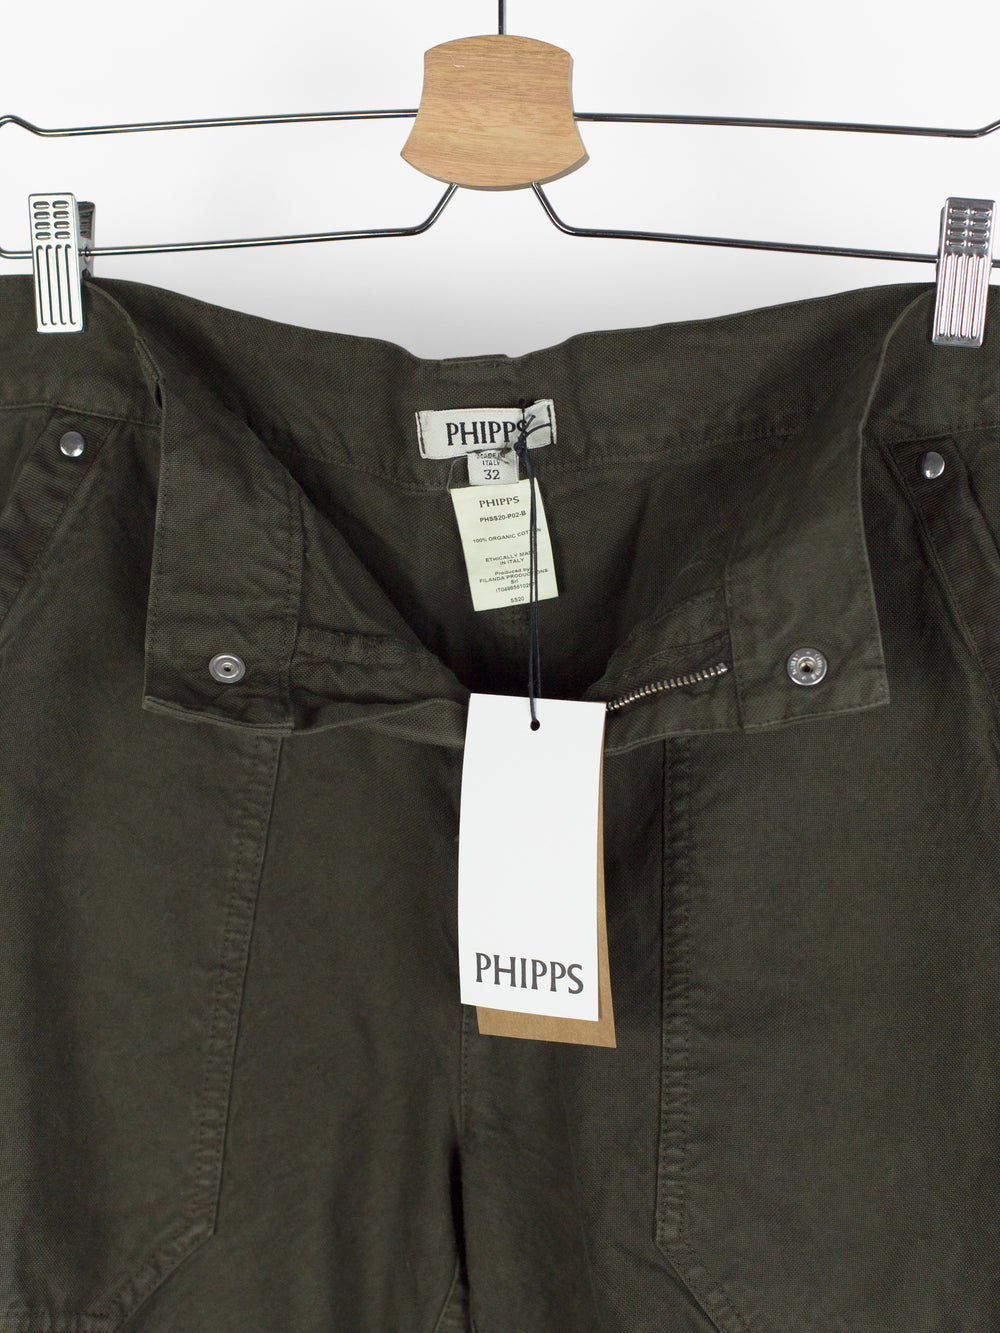 Phipps SS20 Ranger Cotton Workwear Pants